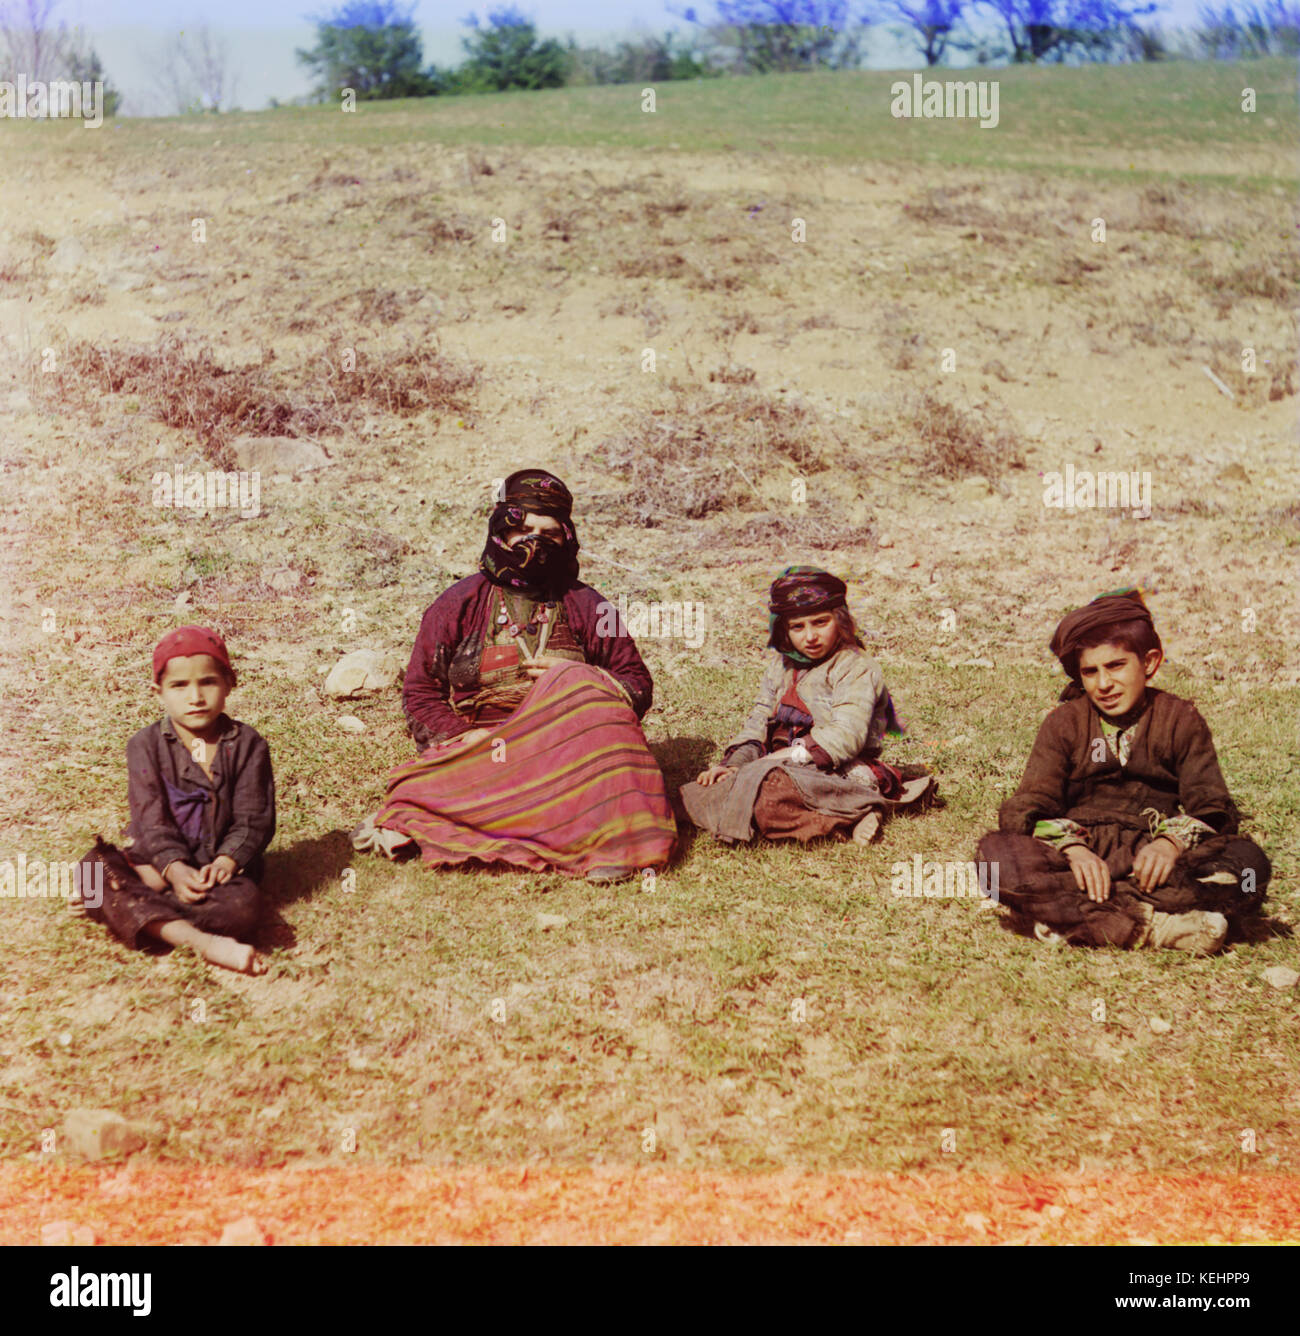 Kurde sitzende Frau mit Kindern im Feld, Artvin, Türkei, prokudin gorskii-Sammlung, 1910 Stockfoto